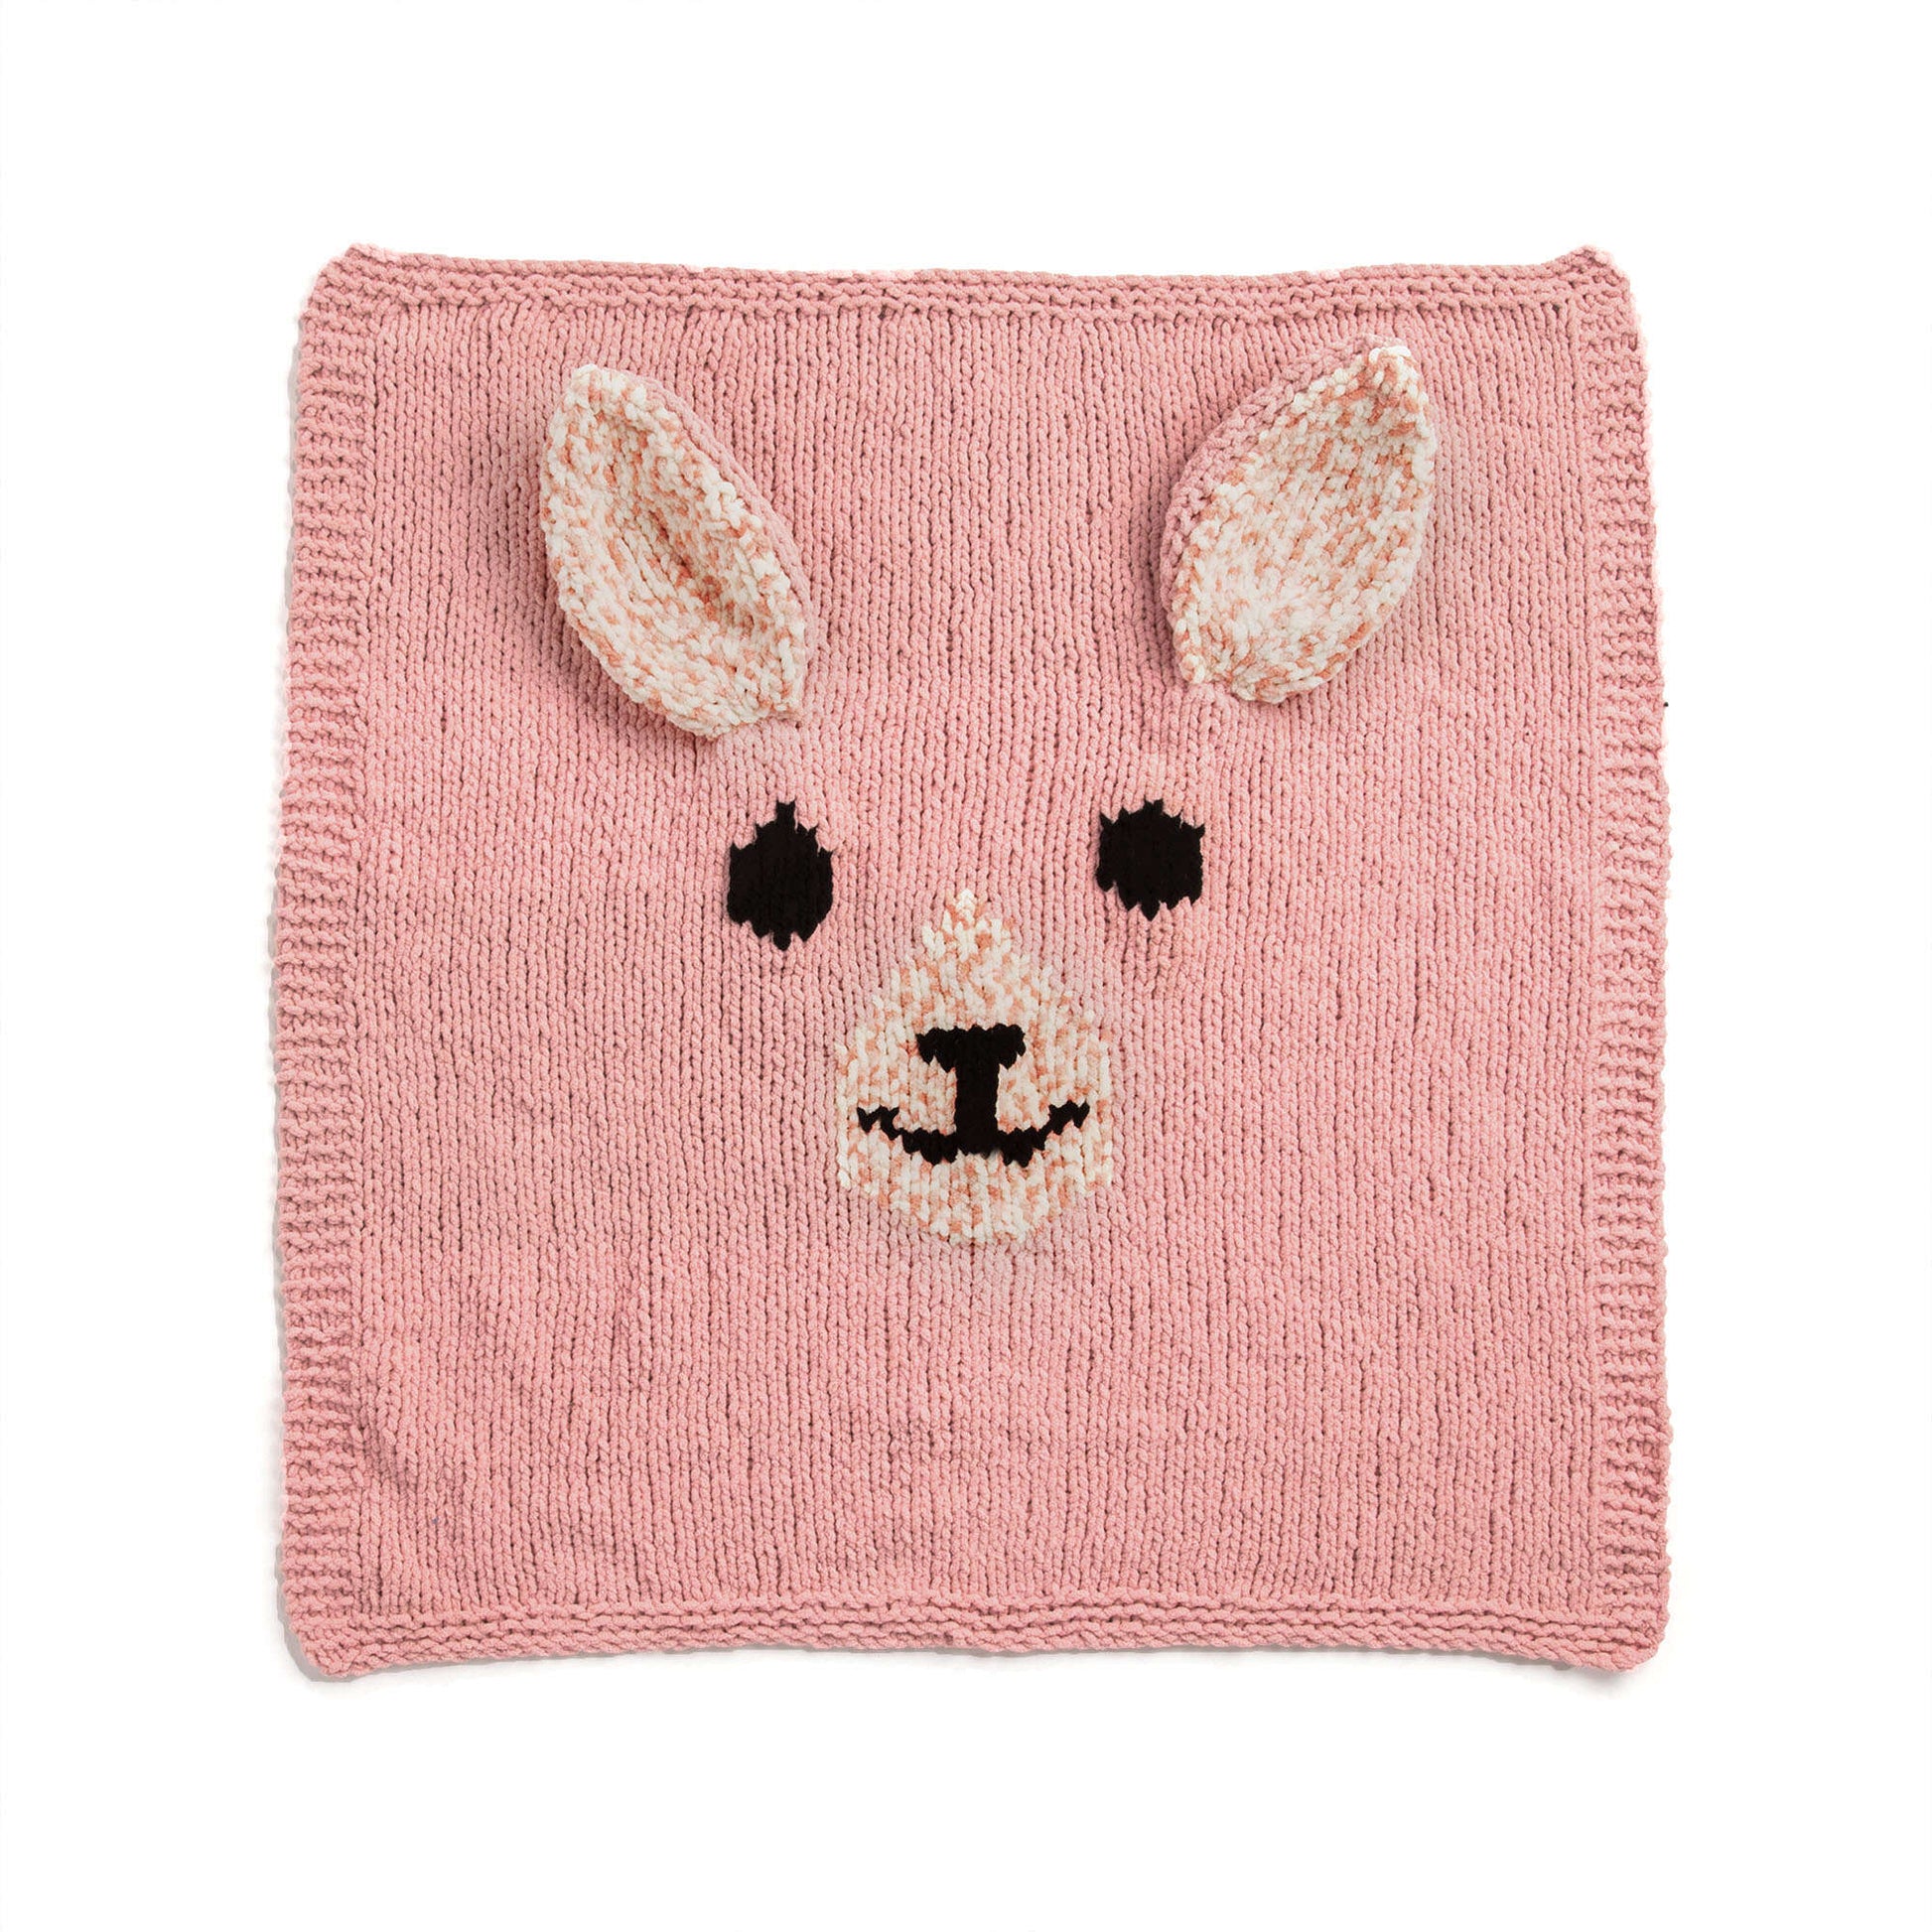 Free Bernat Snuggly Knit Bunny Crochet Blanket Pattern